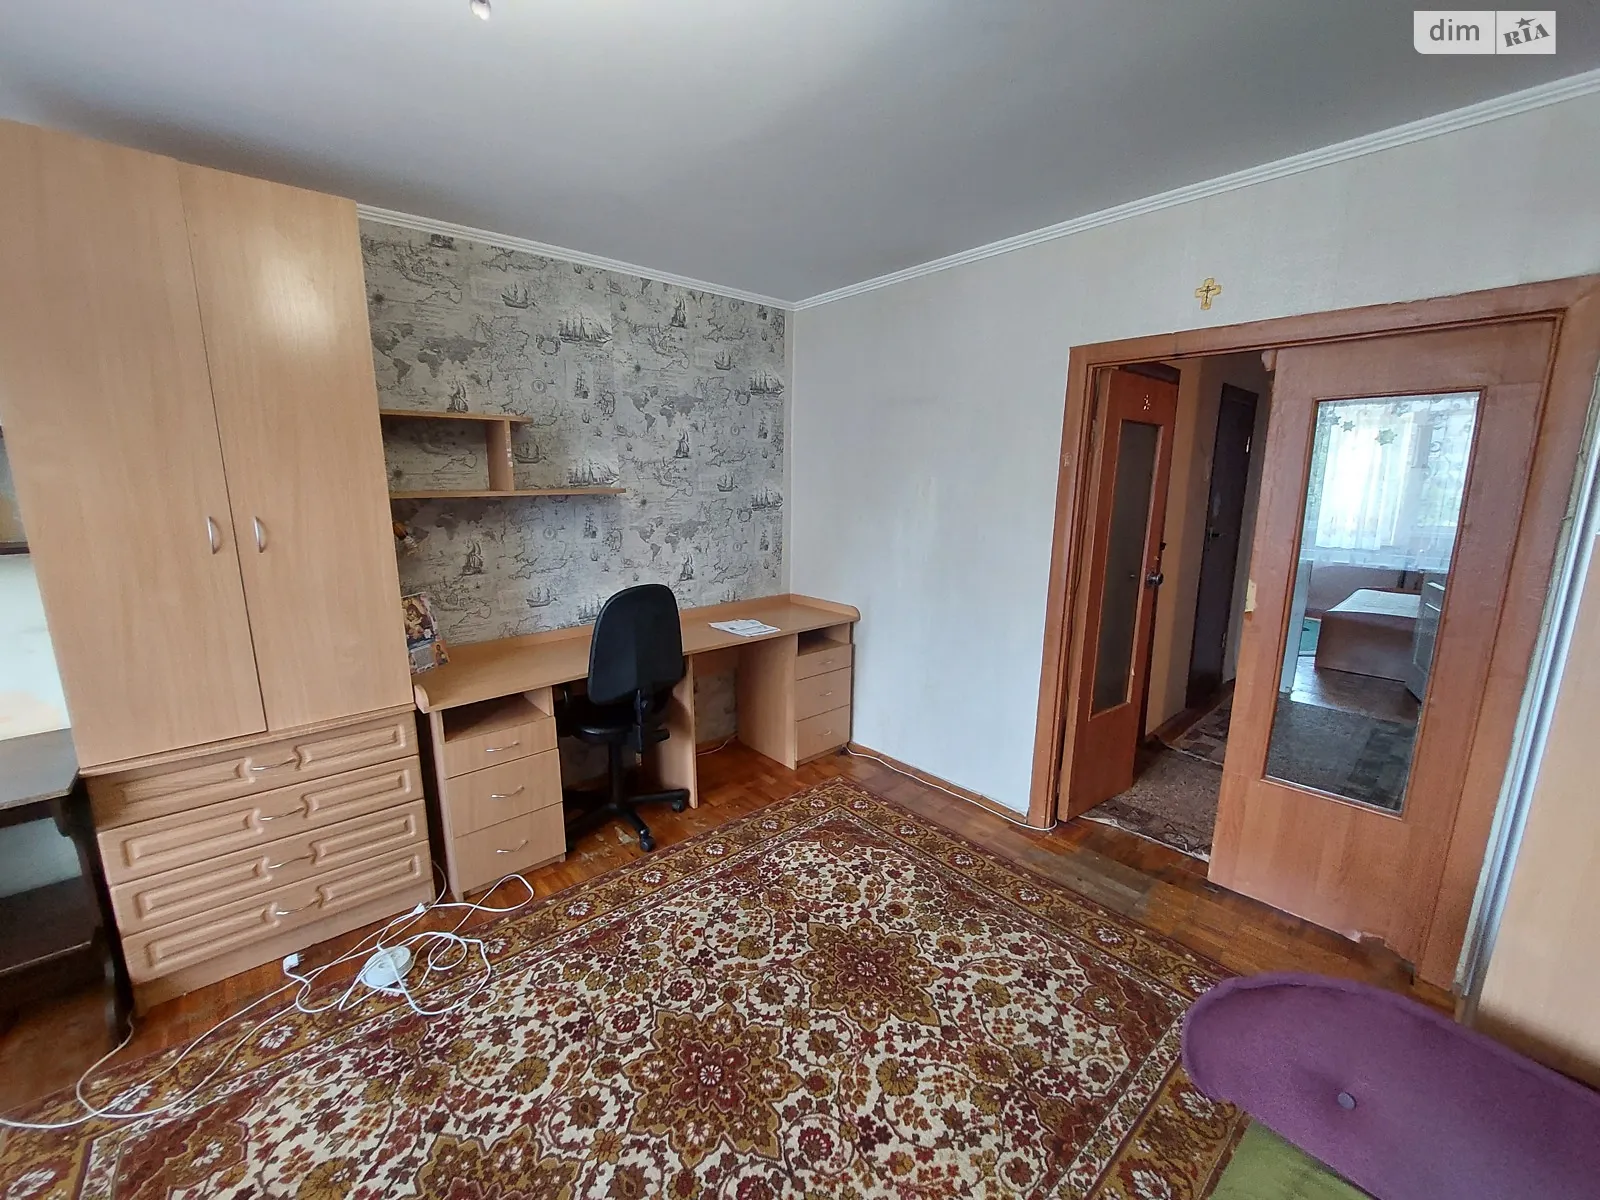 Сдается в аренду 2-комнатная квартира 51 кв. м в Виннице, ул. Антонова Олега, 10А - фото 1